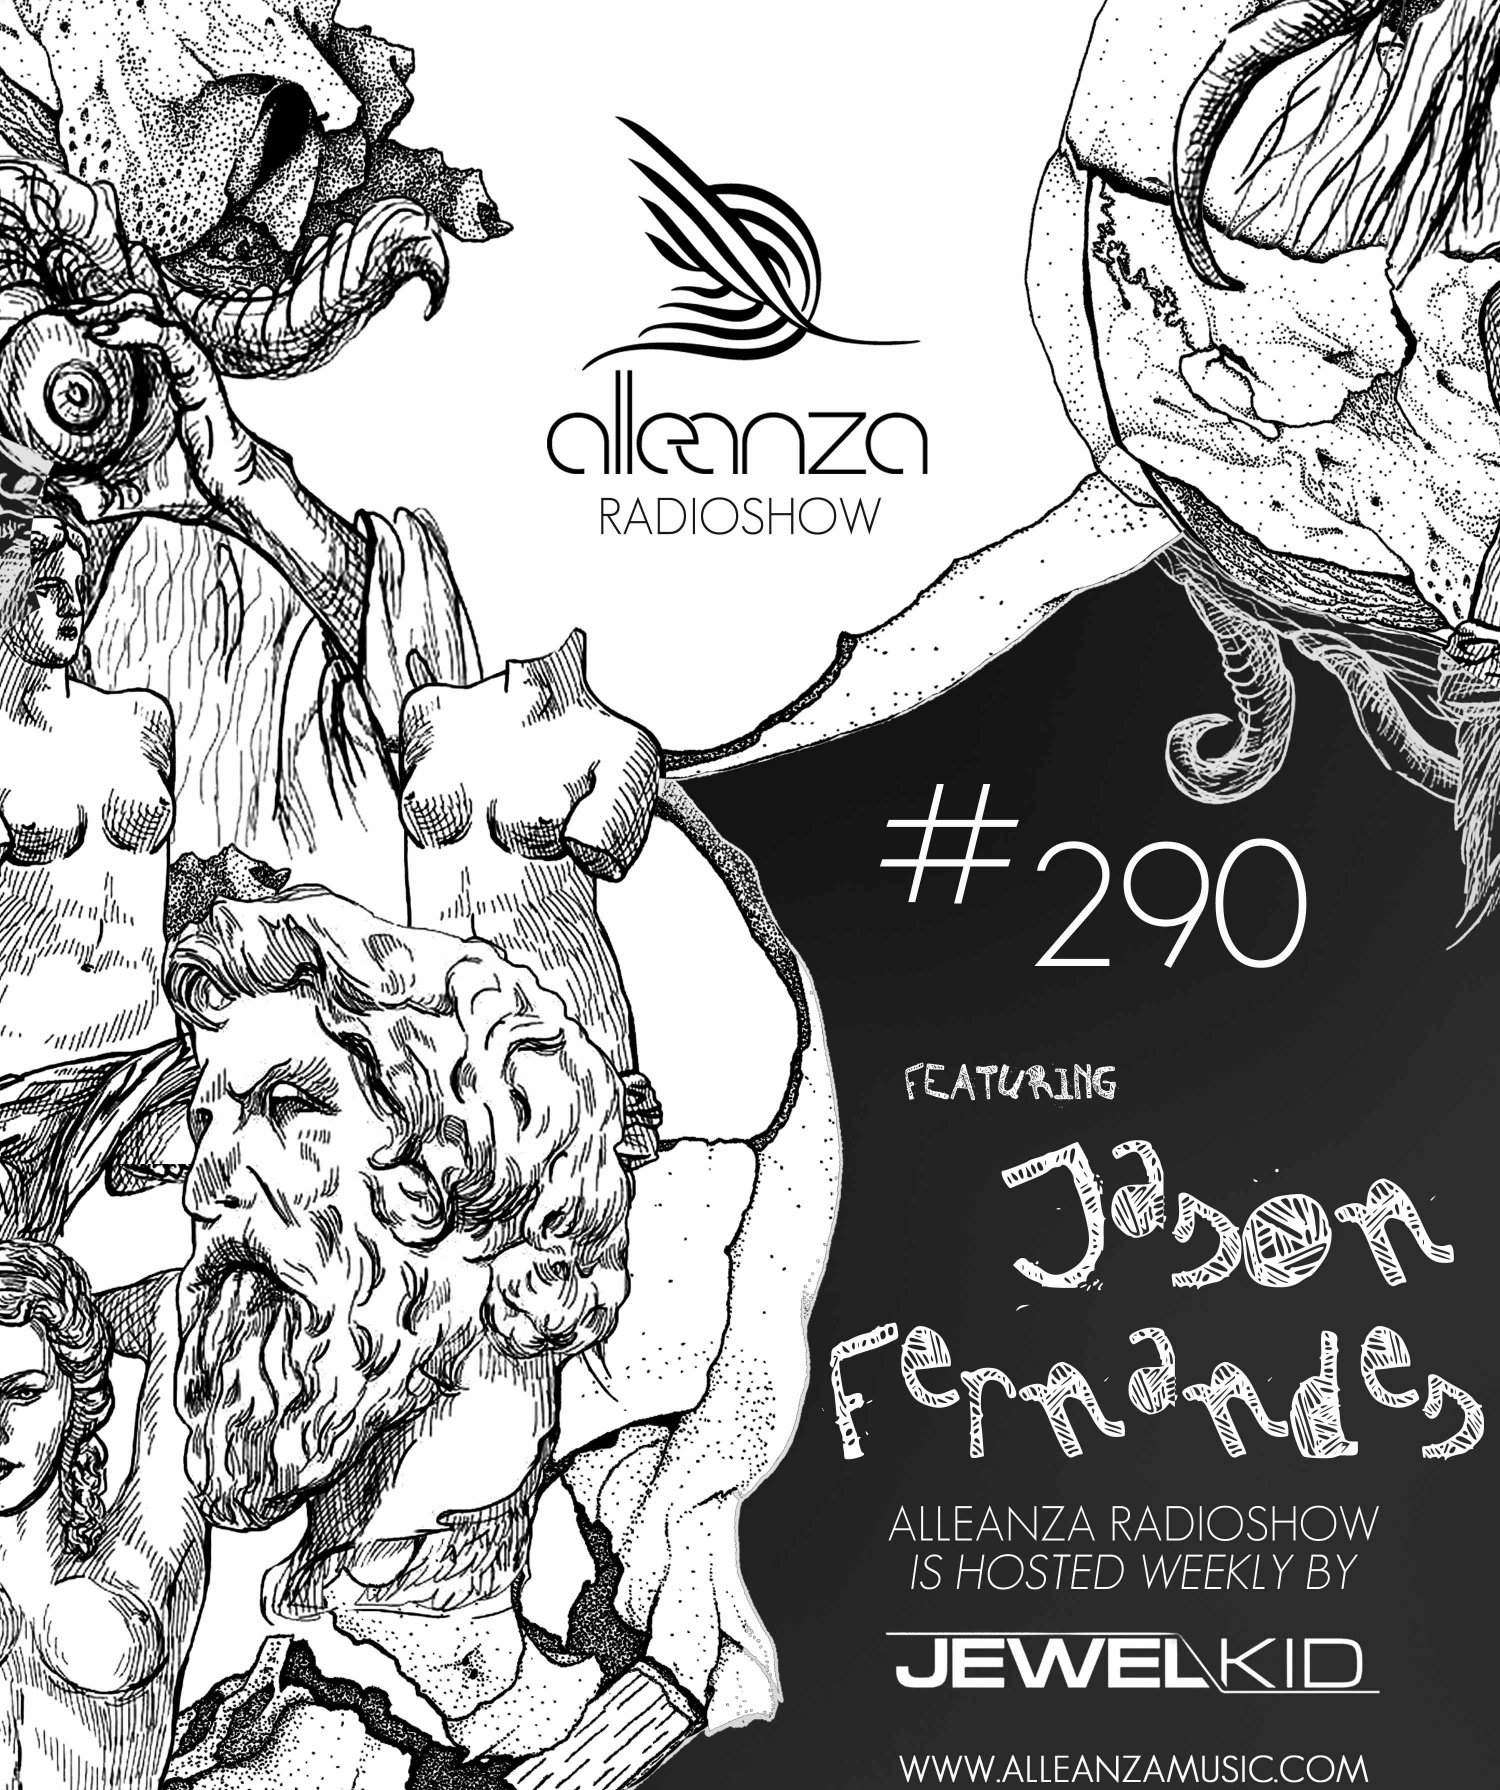 Alleanza Radio Show :: Episode 290, Jason Fernandez guest mix (aired on September 12th, 2017) banner logo